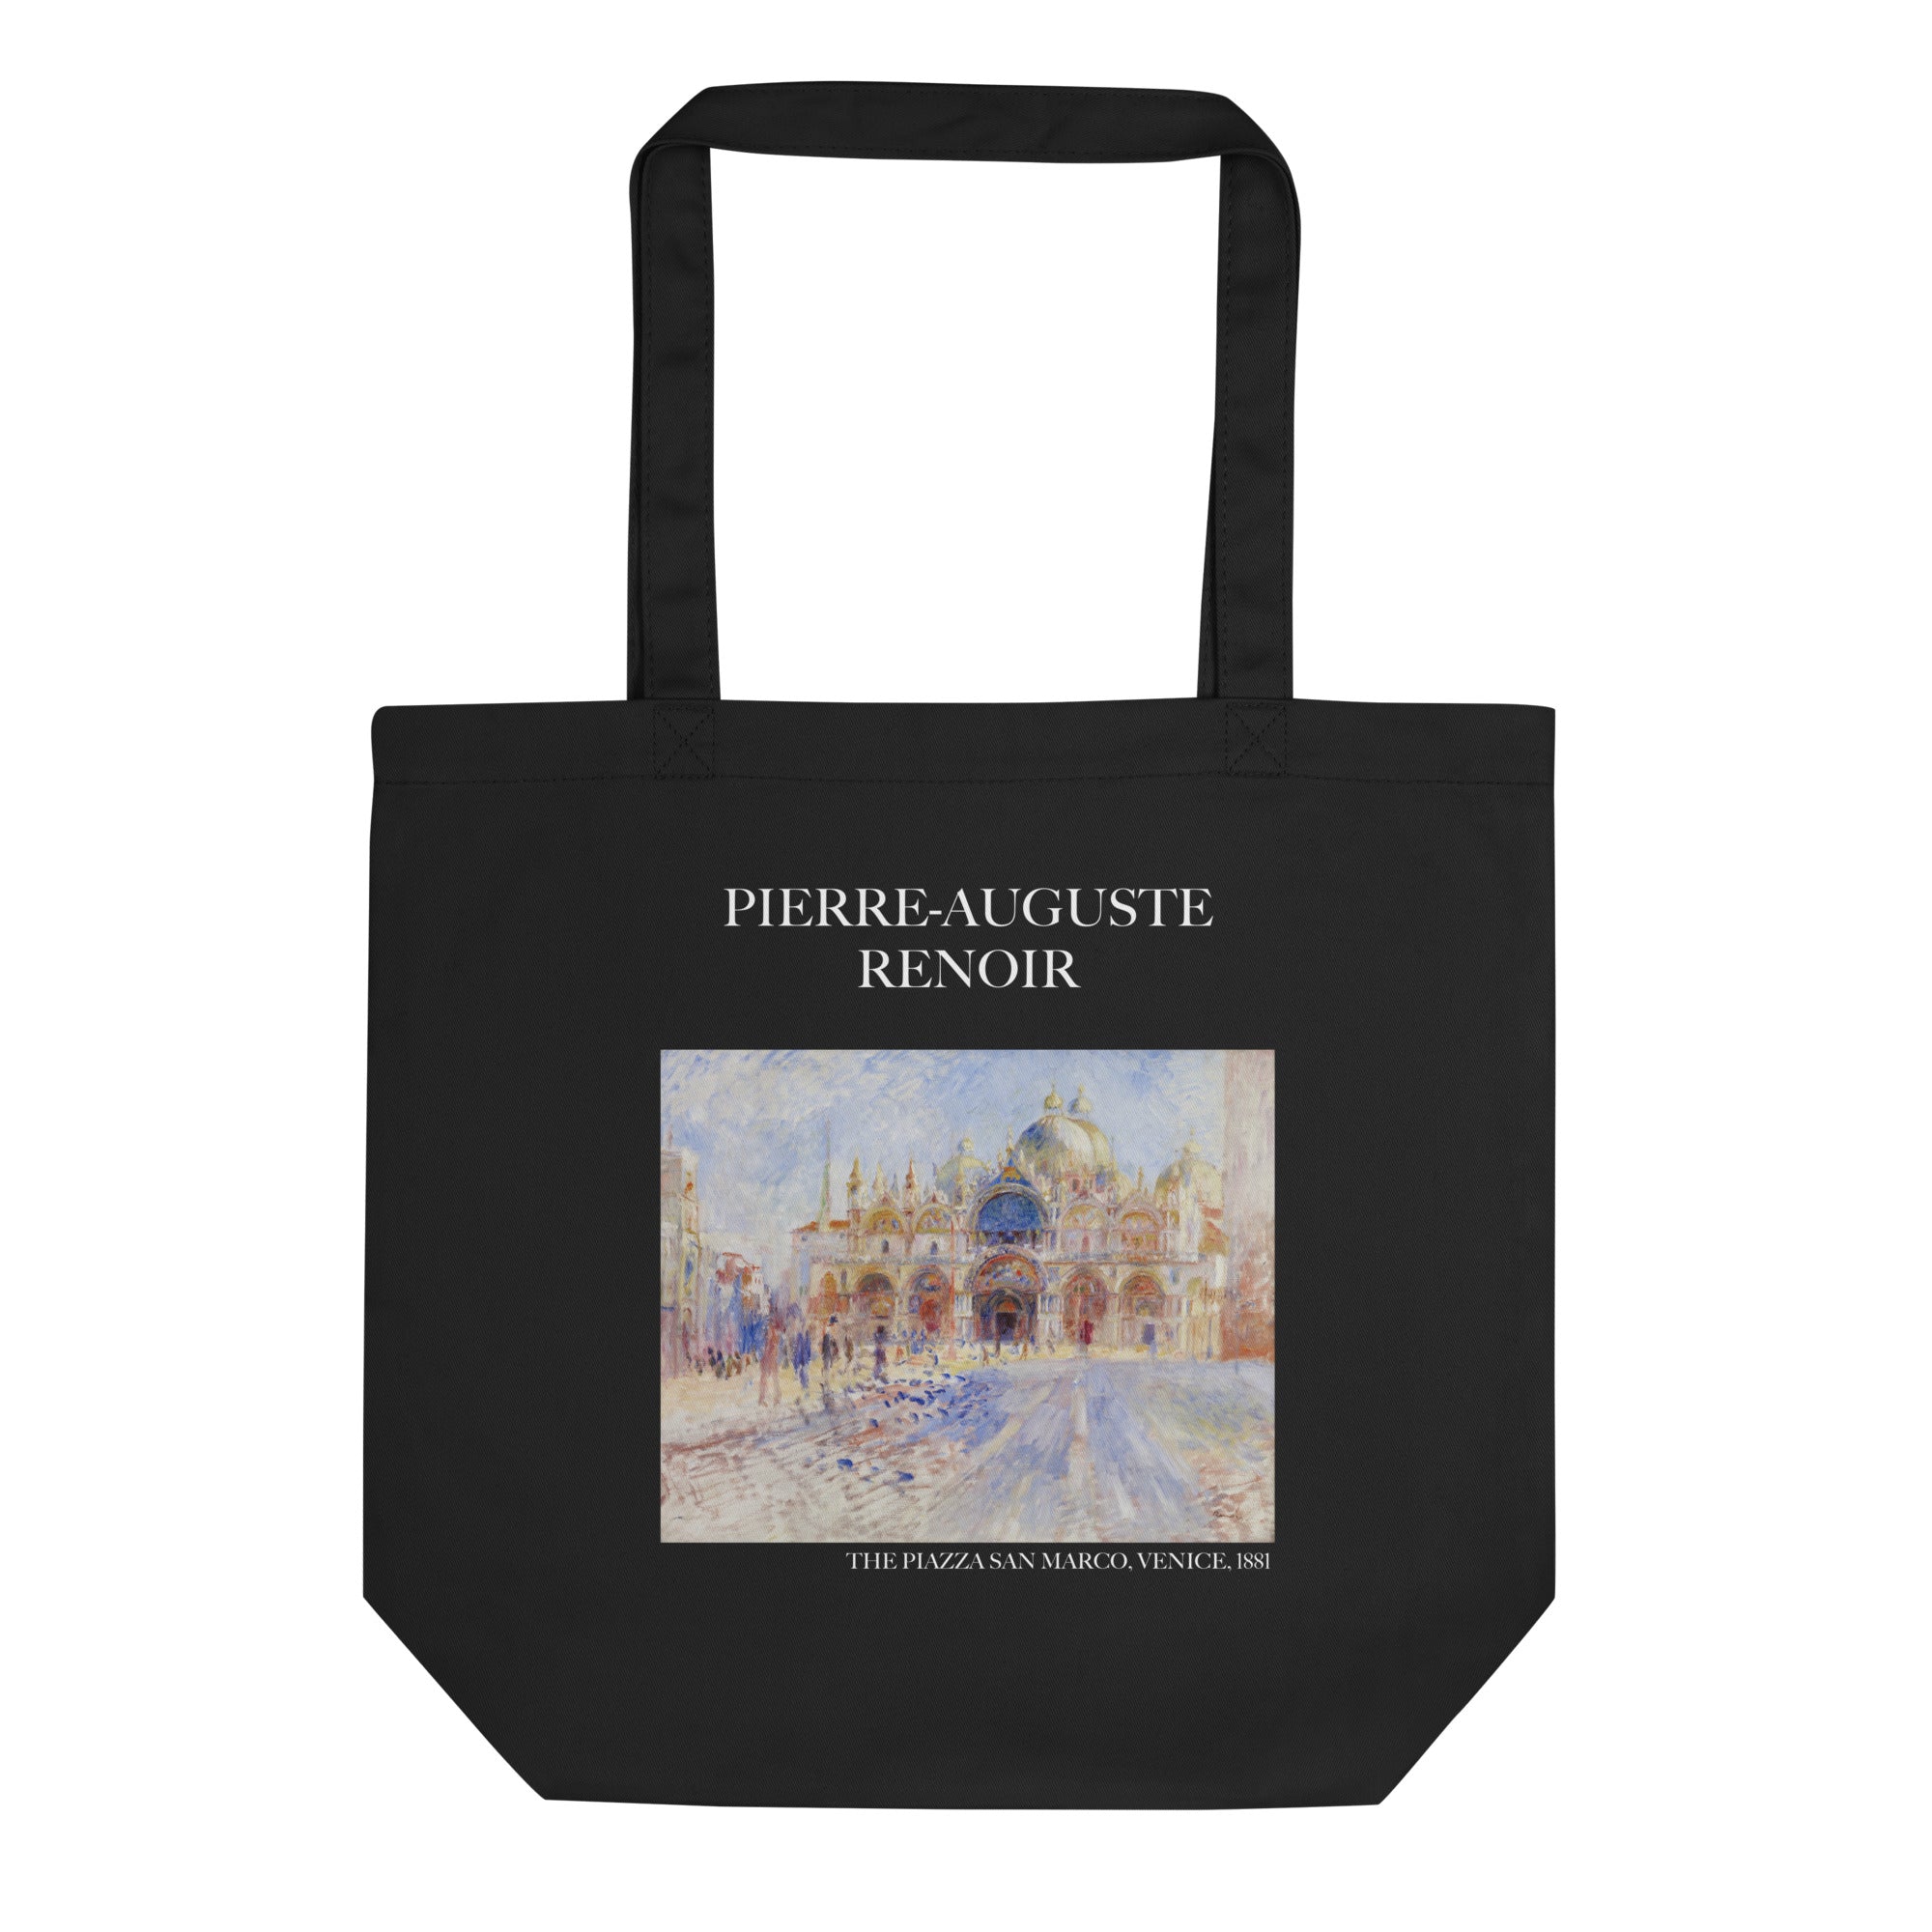 Pierre-Auguste Renoir 'The Piazza San Marco, Venice' Famous Painting Totebag | Eco Friendly Art Tote Bag